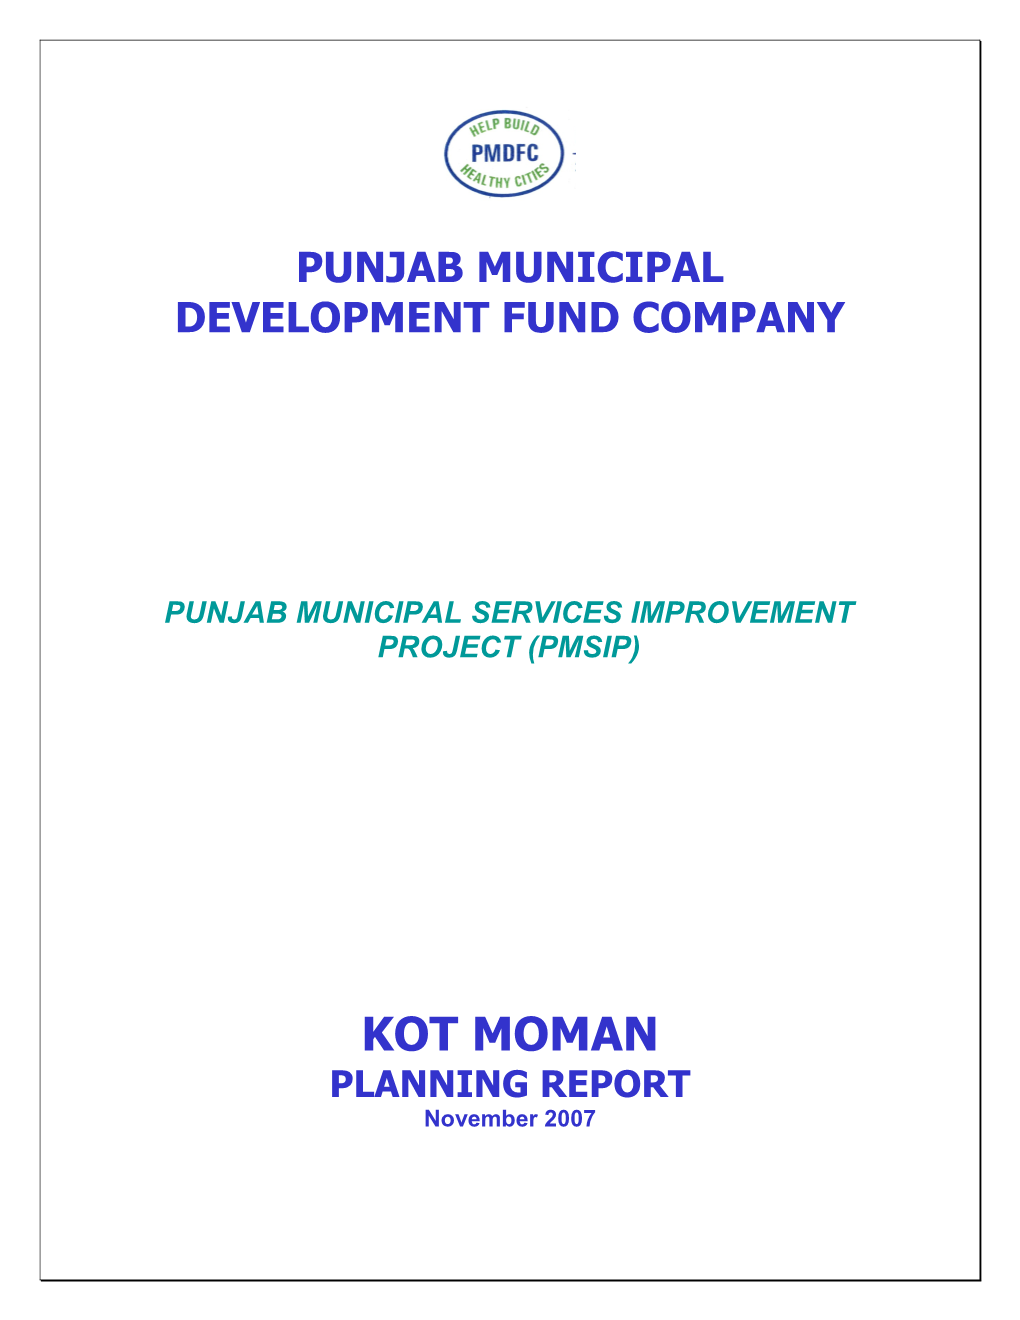 Punjab Municipal Services Improvement Project (Pmsip)